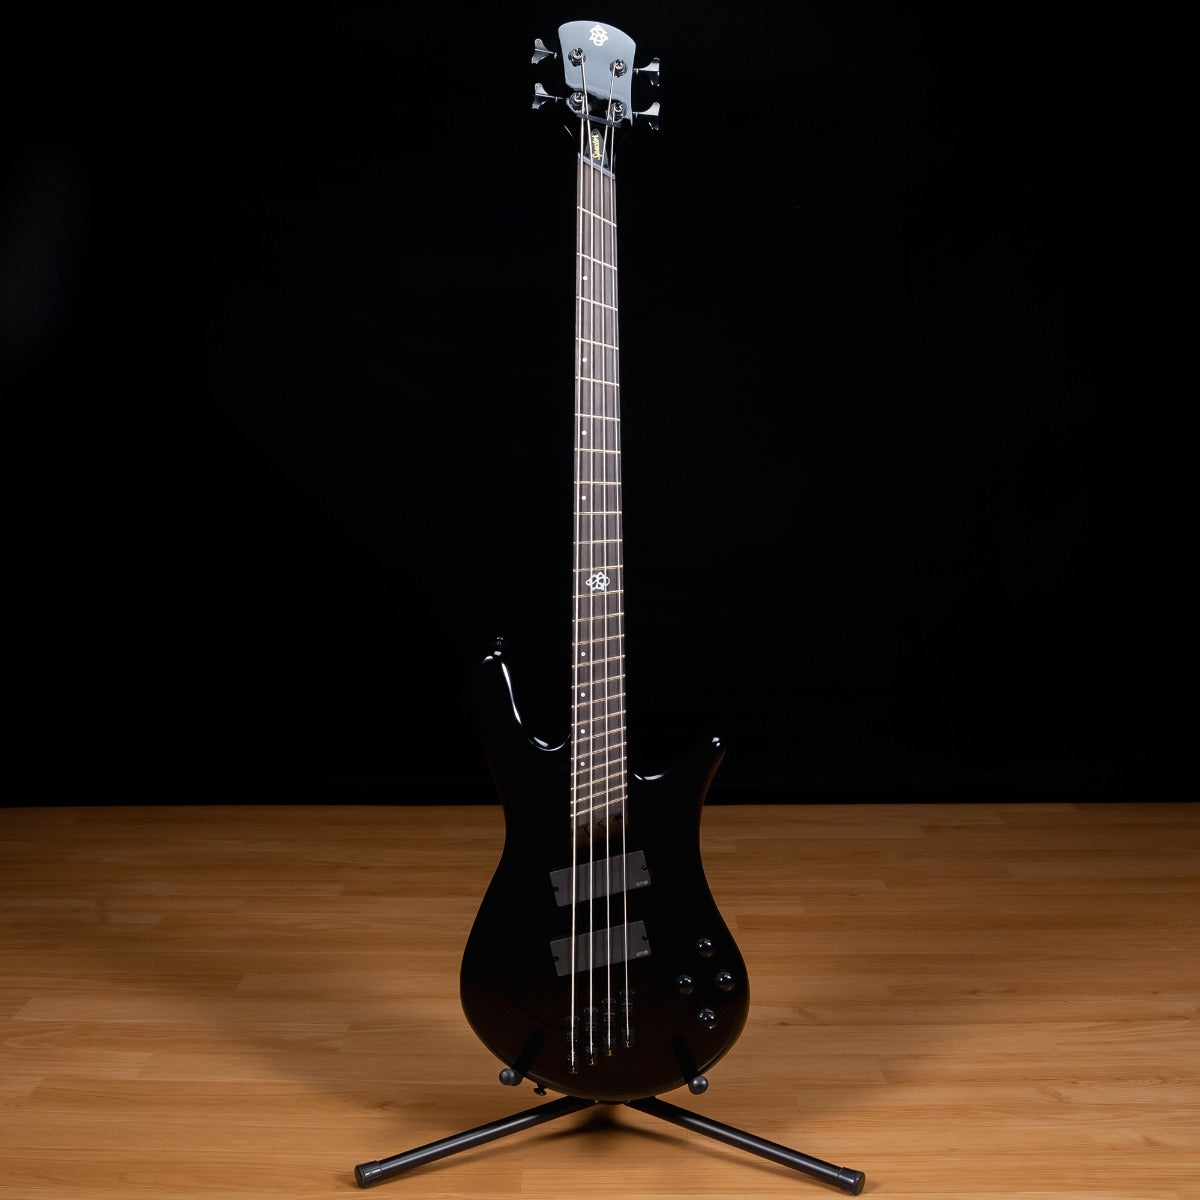 Spector NS Dimension HP 4 Bass Guitar - Black Gloss view 2